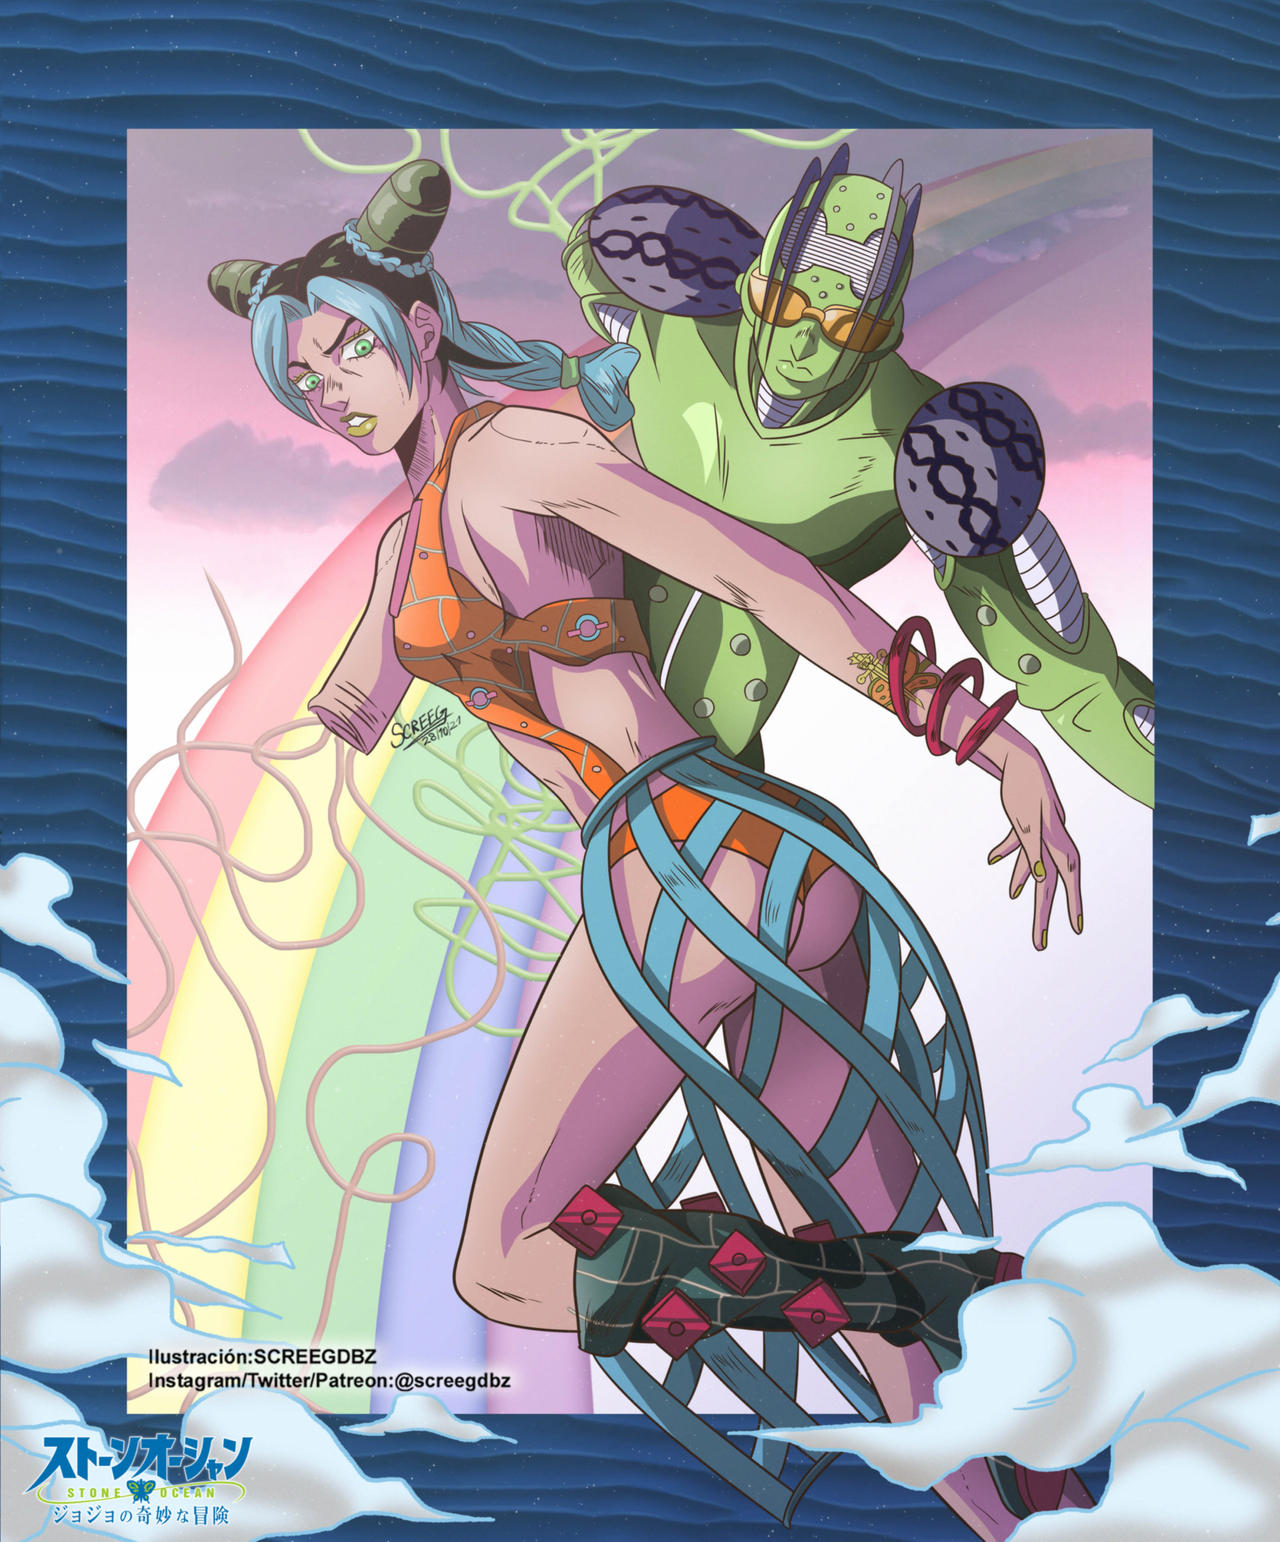 Stone Ocean Anime Fanart Poster! by screegdbz on DeviantArt